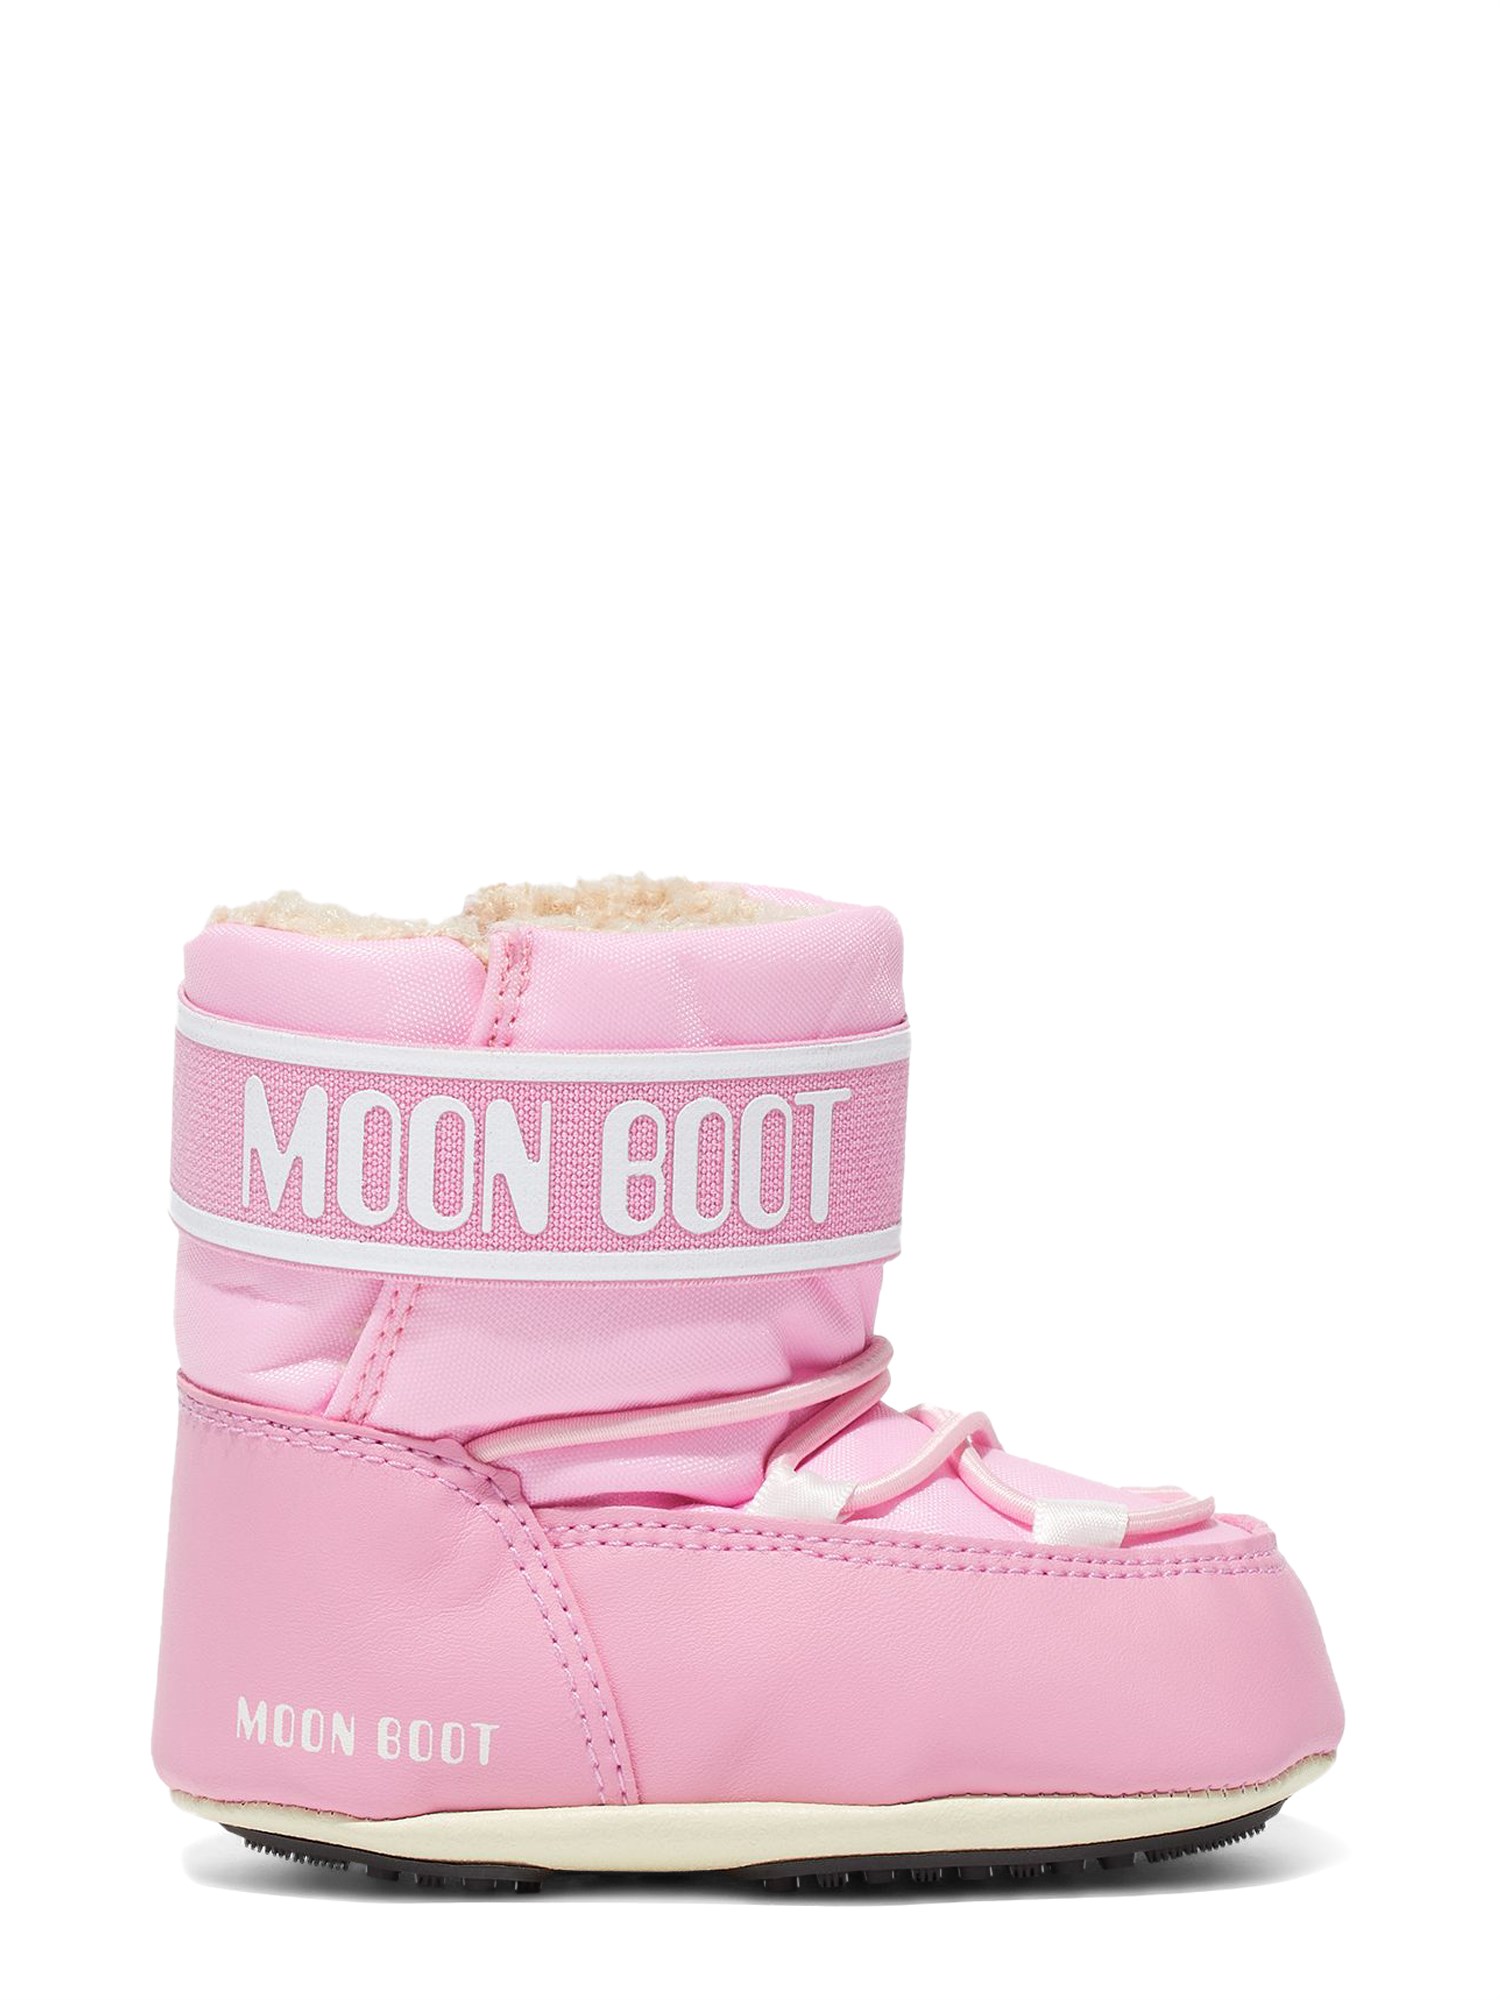 Moon Boot moon boot crib nylon